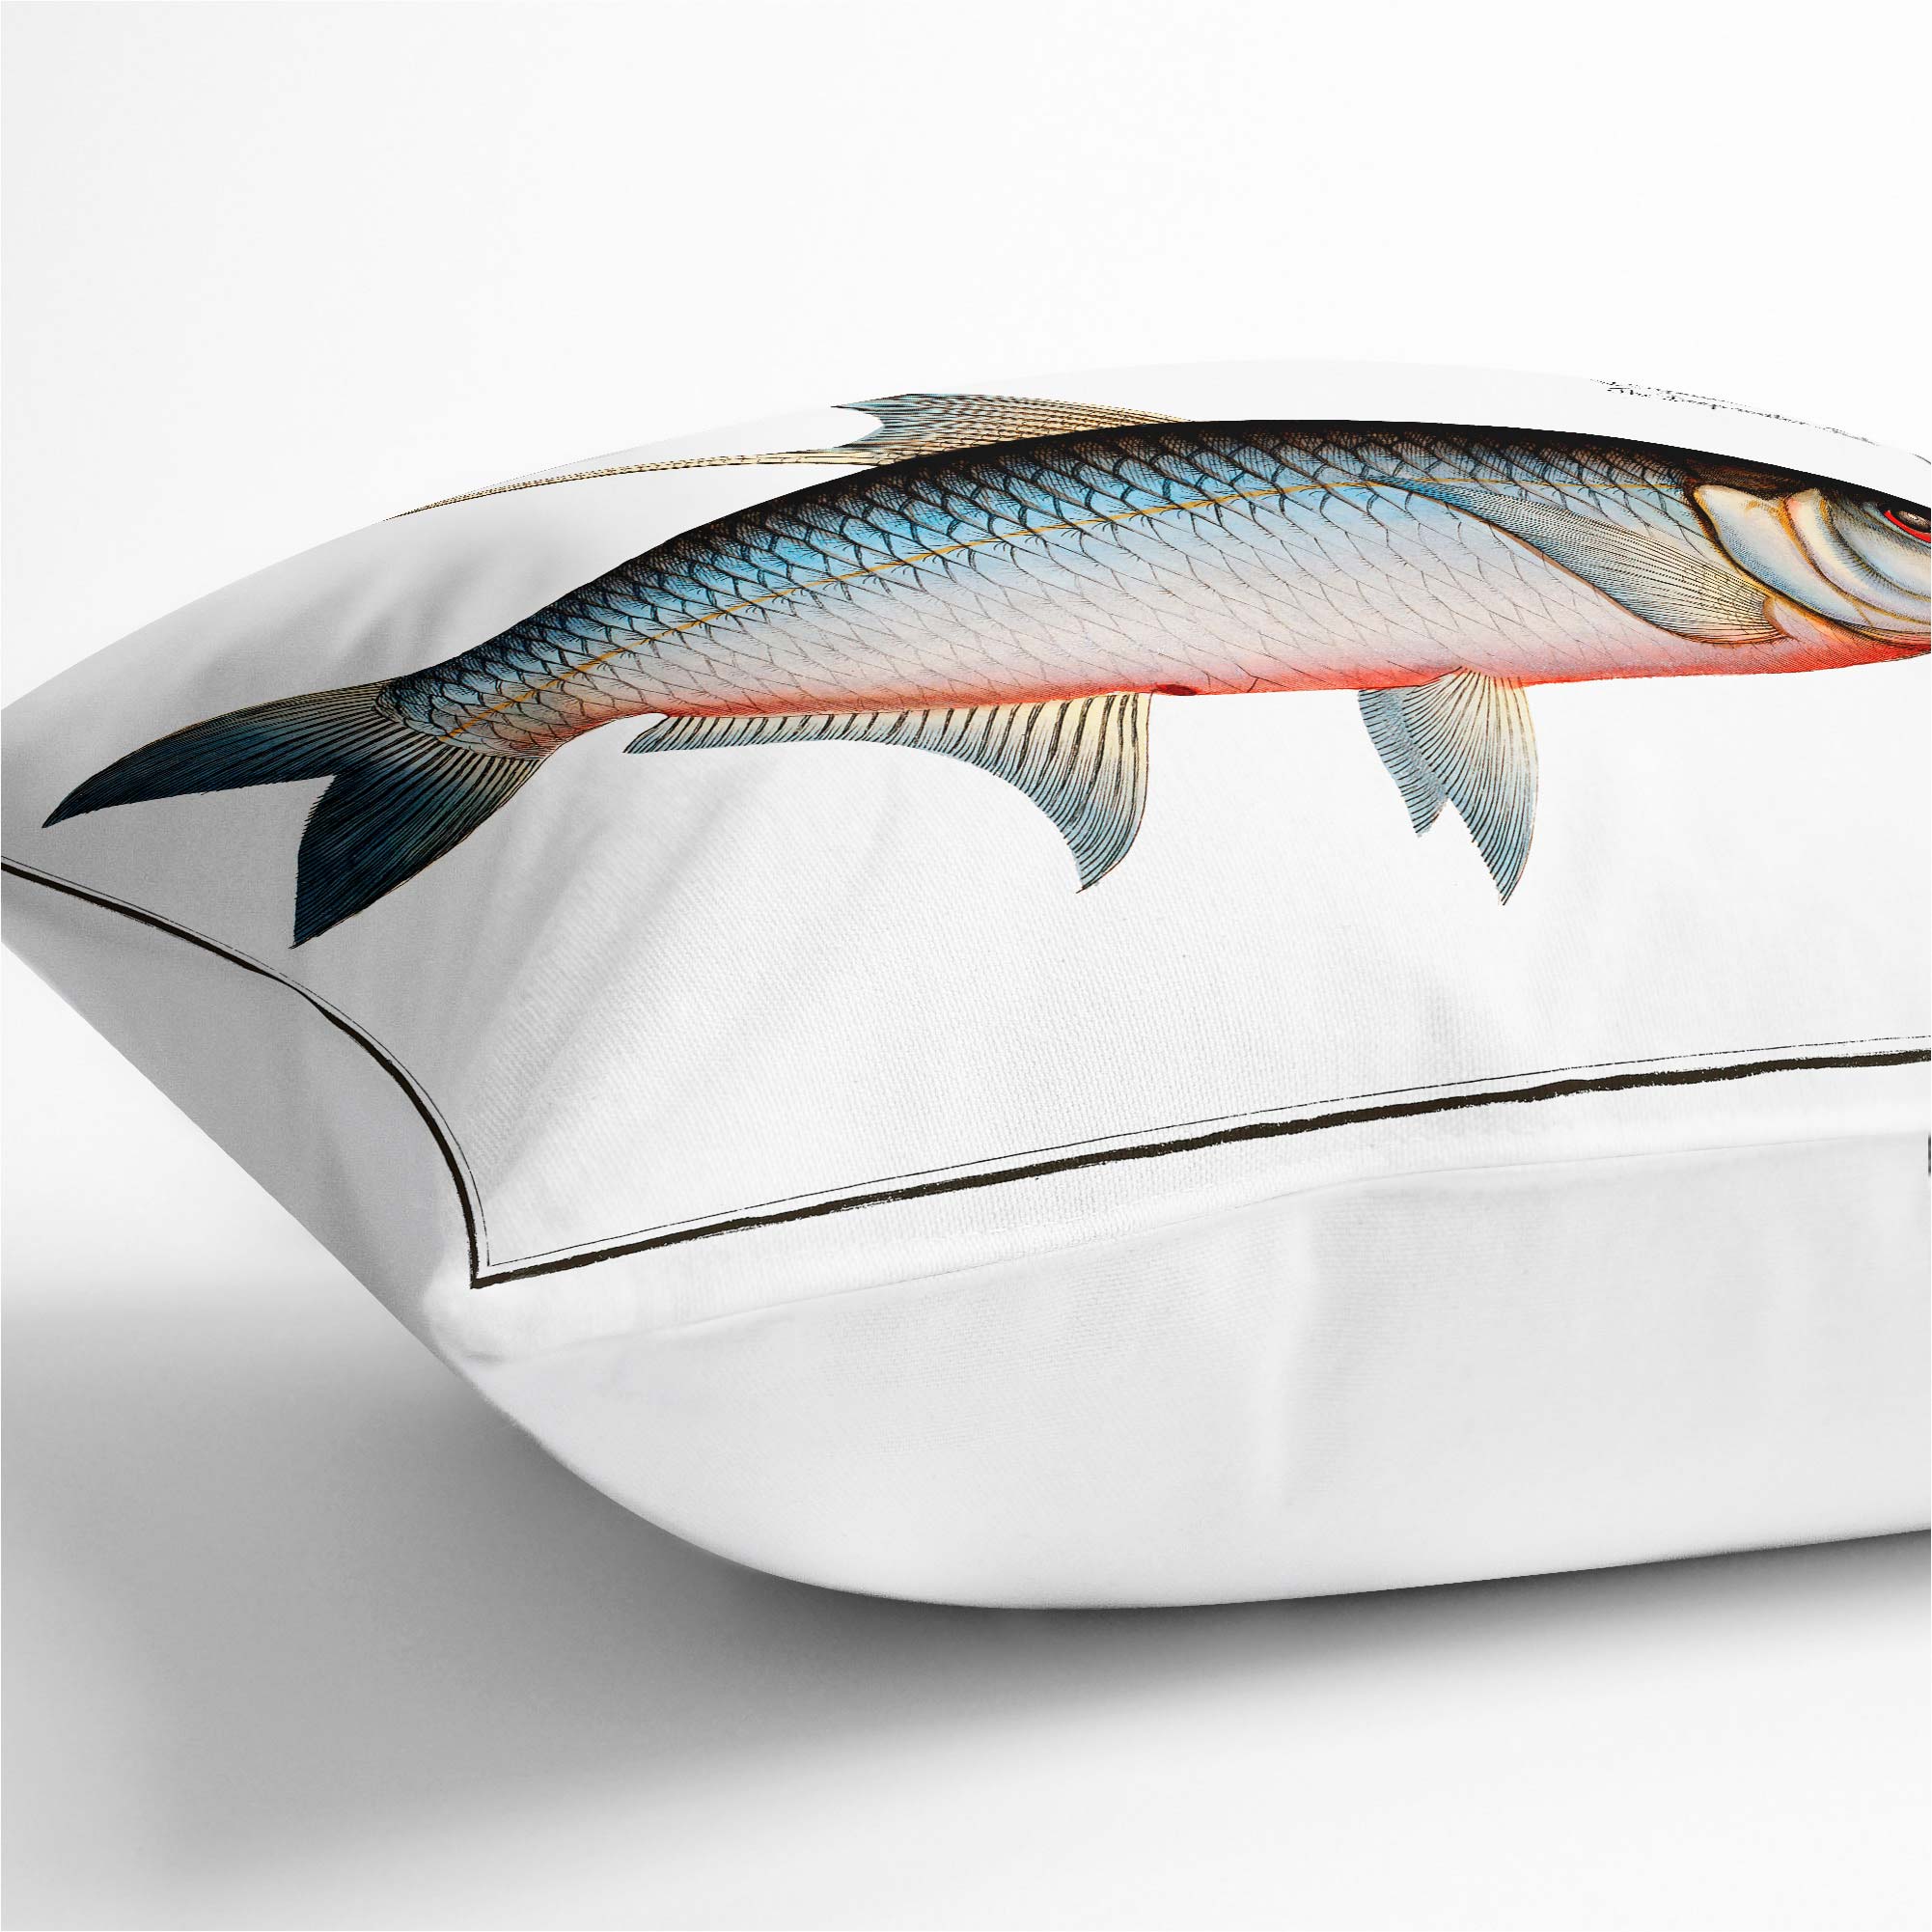 Swordfish Animal M.E Bloch 1 x Soft Cushion and Cover Sofa Bed Throw Pillow 